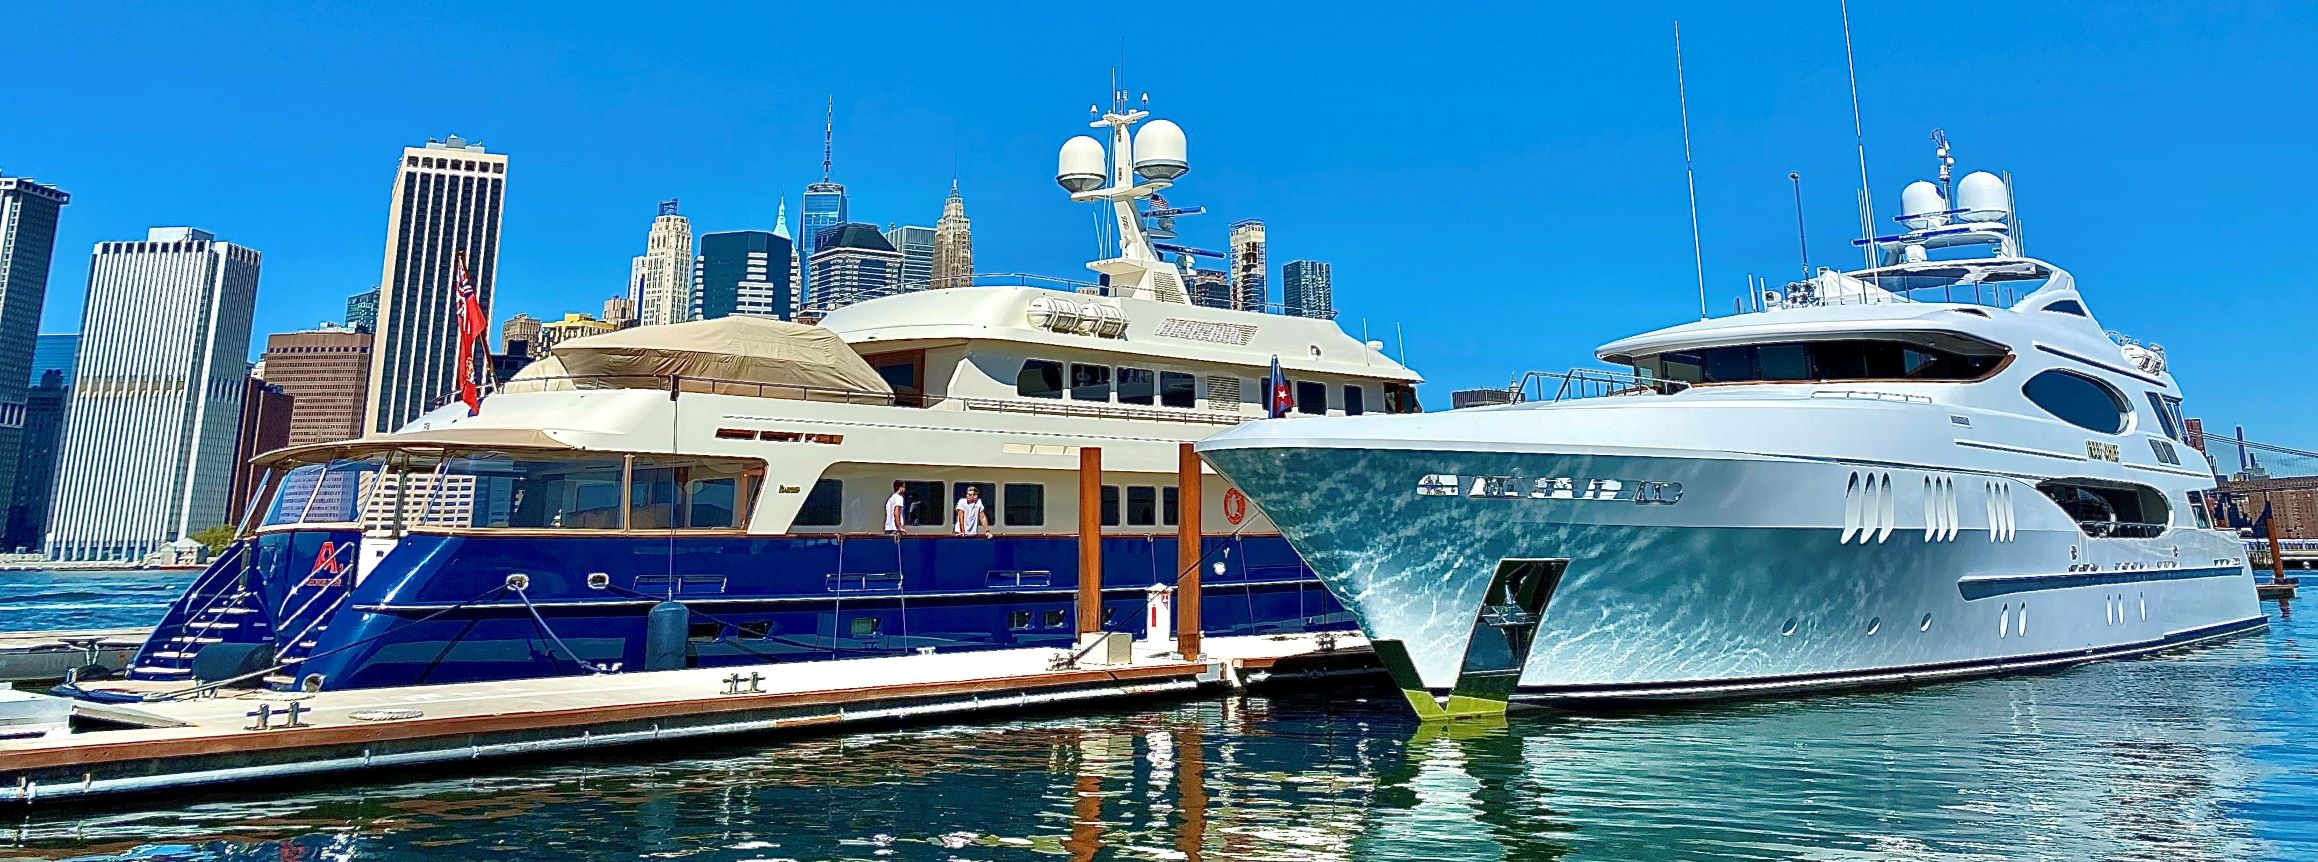 superyacht marina new york